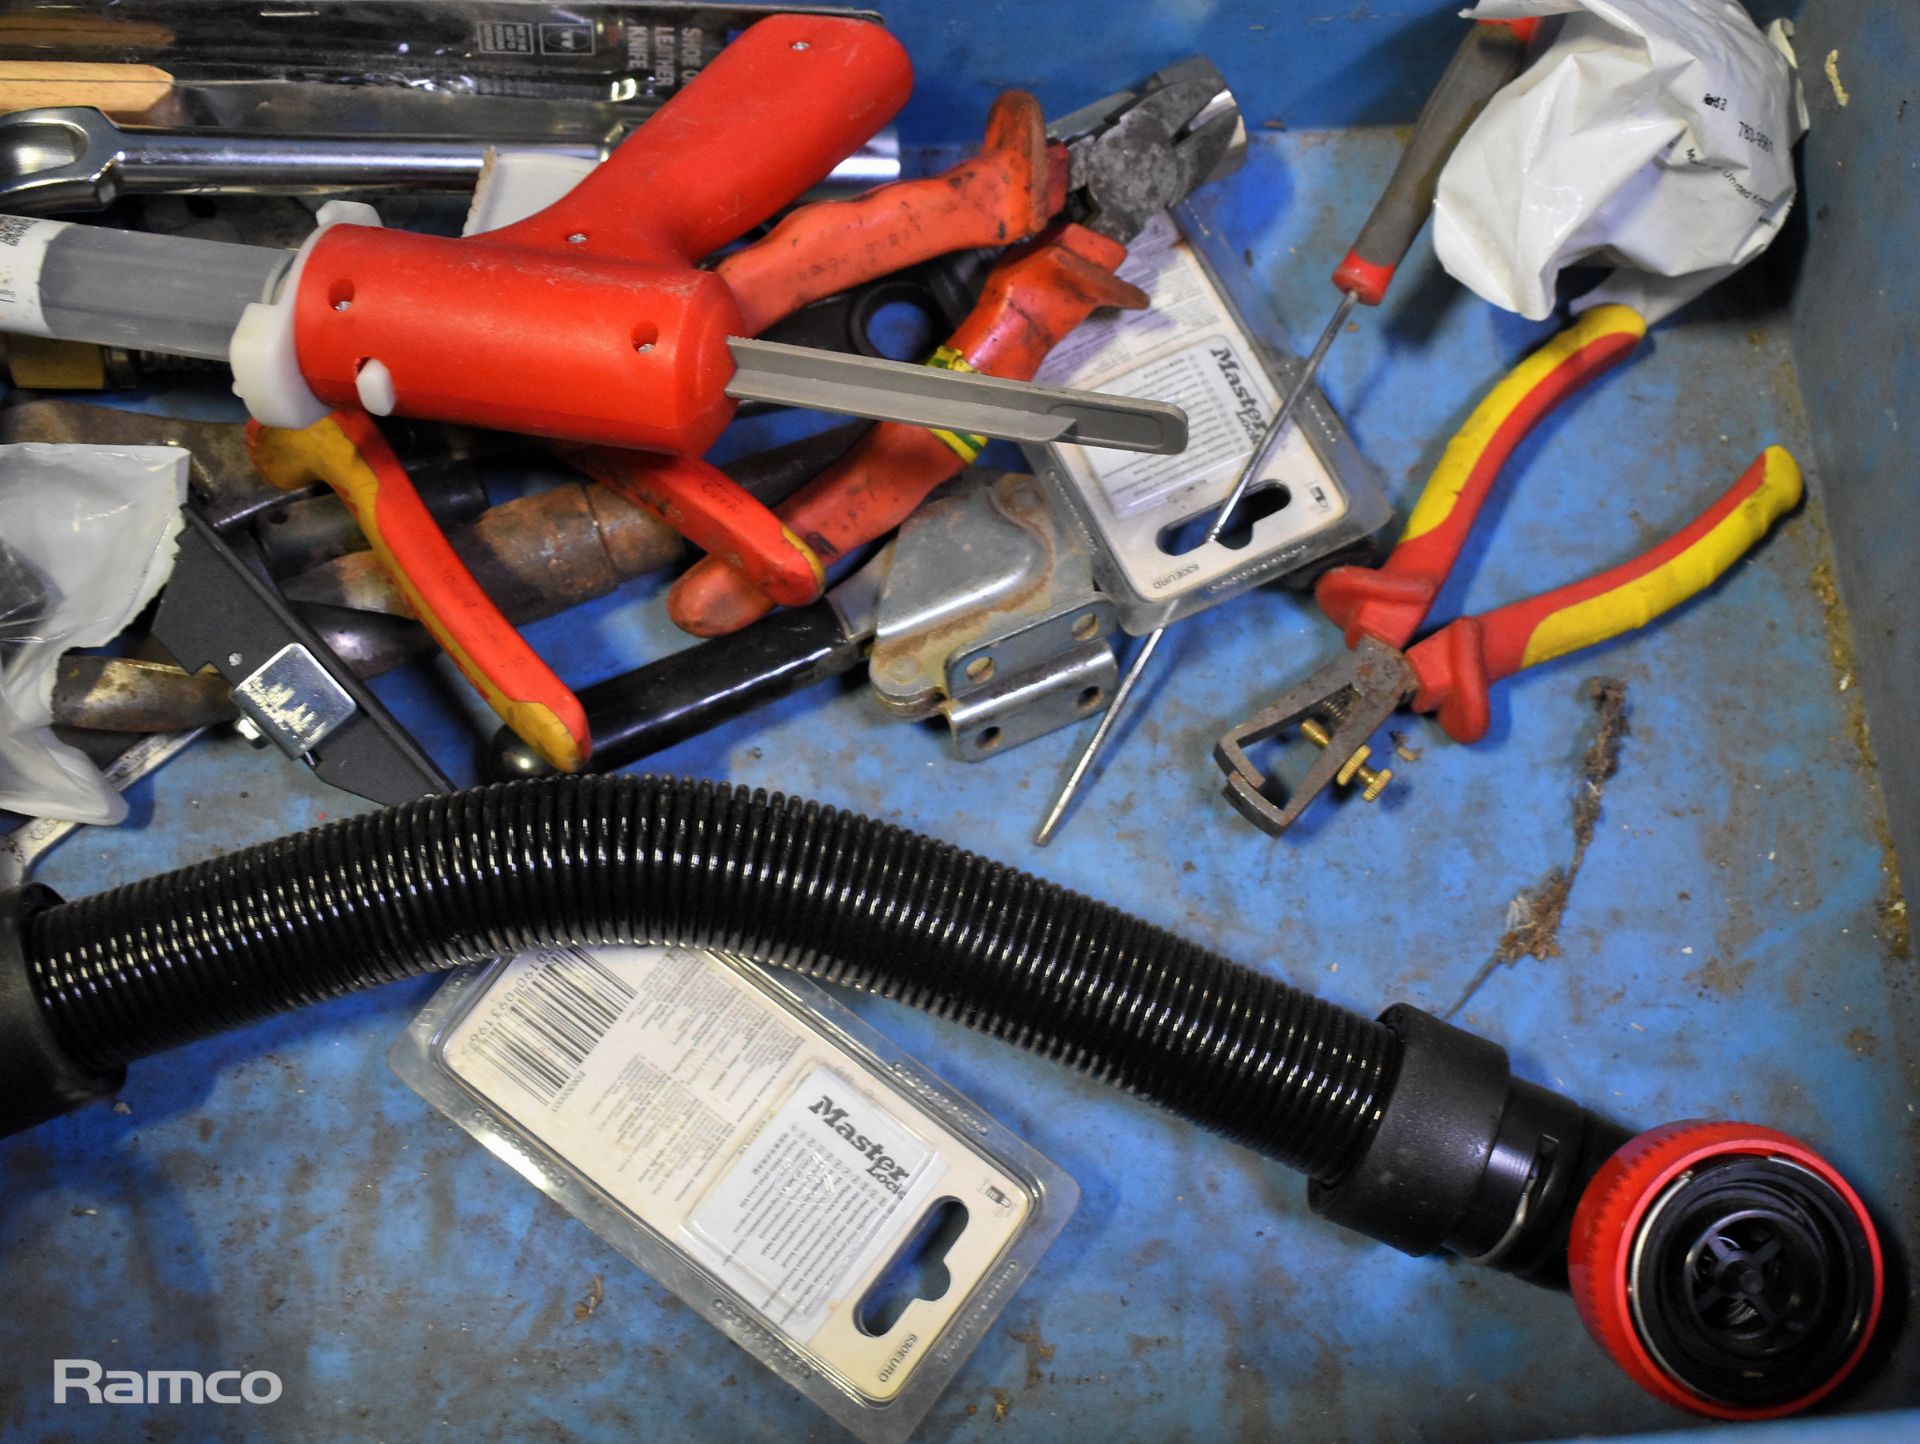 Garage tools, filters, Makita HR2020 drill - Image 6 of 7